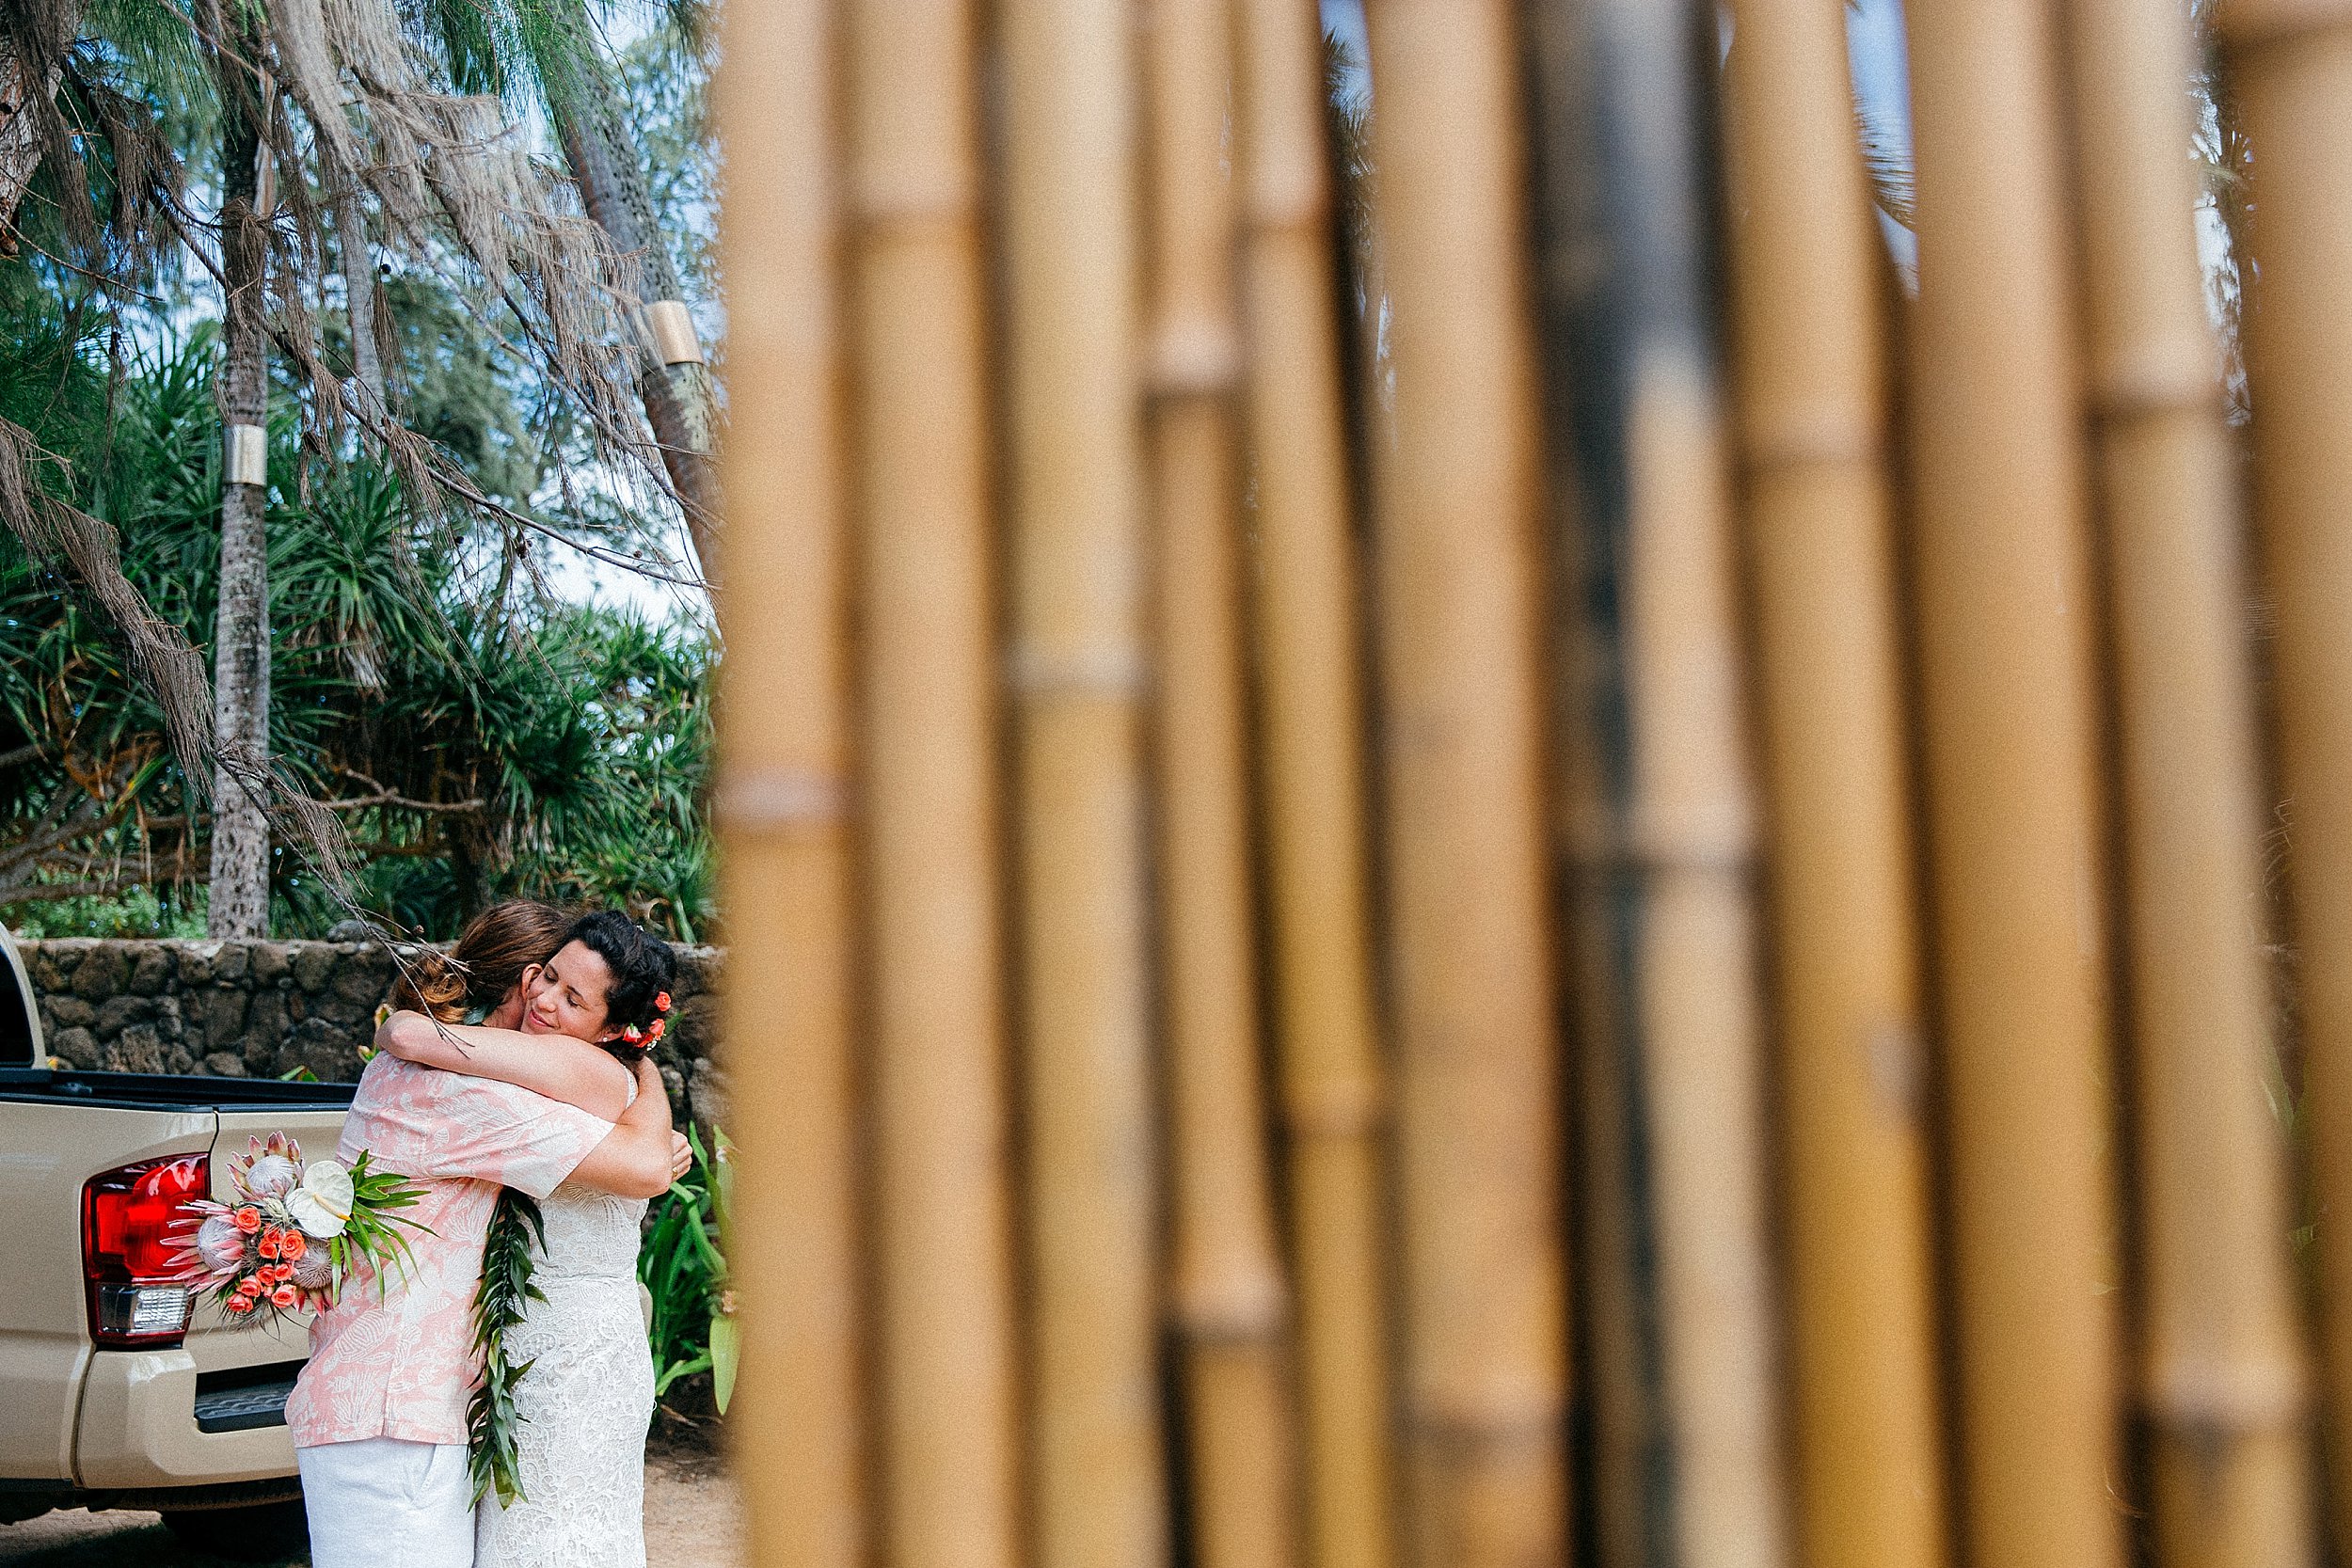  Backyard Hawaii Wedding on Oahu's North Shore - Pounders Beach 